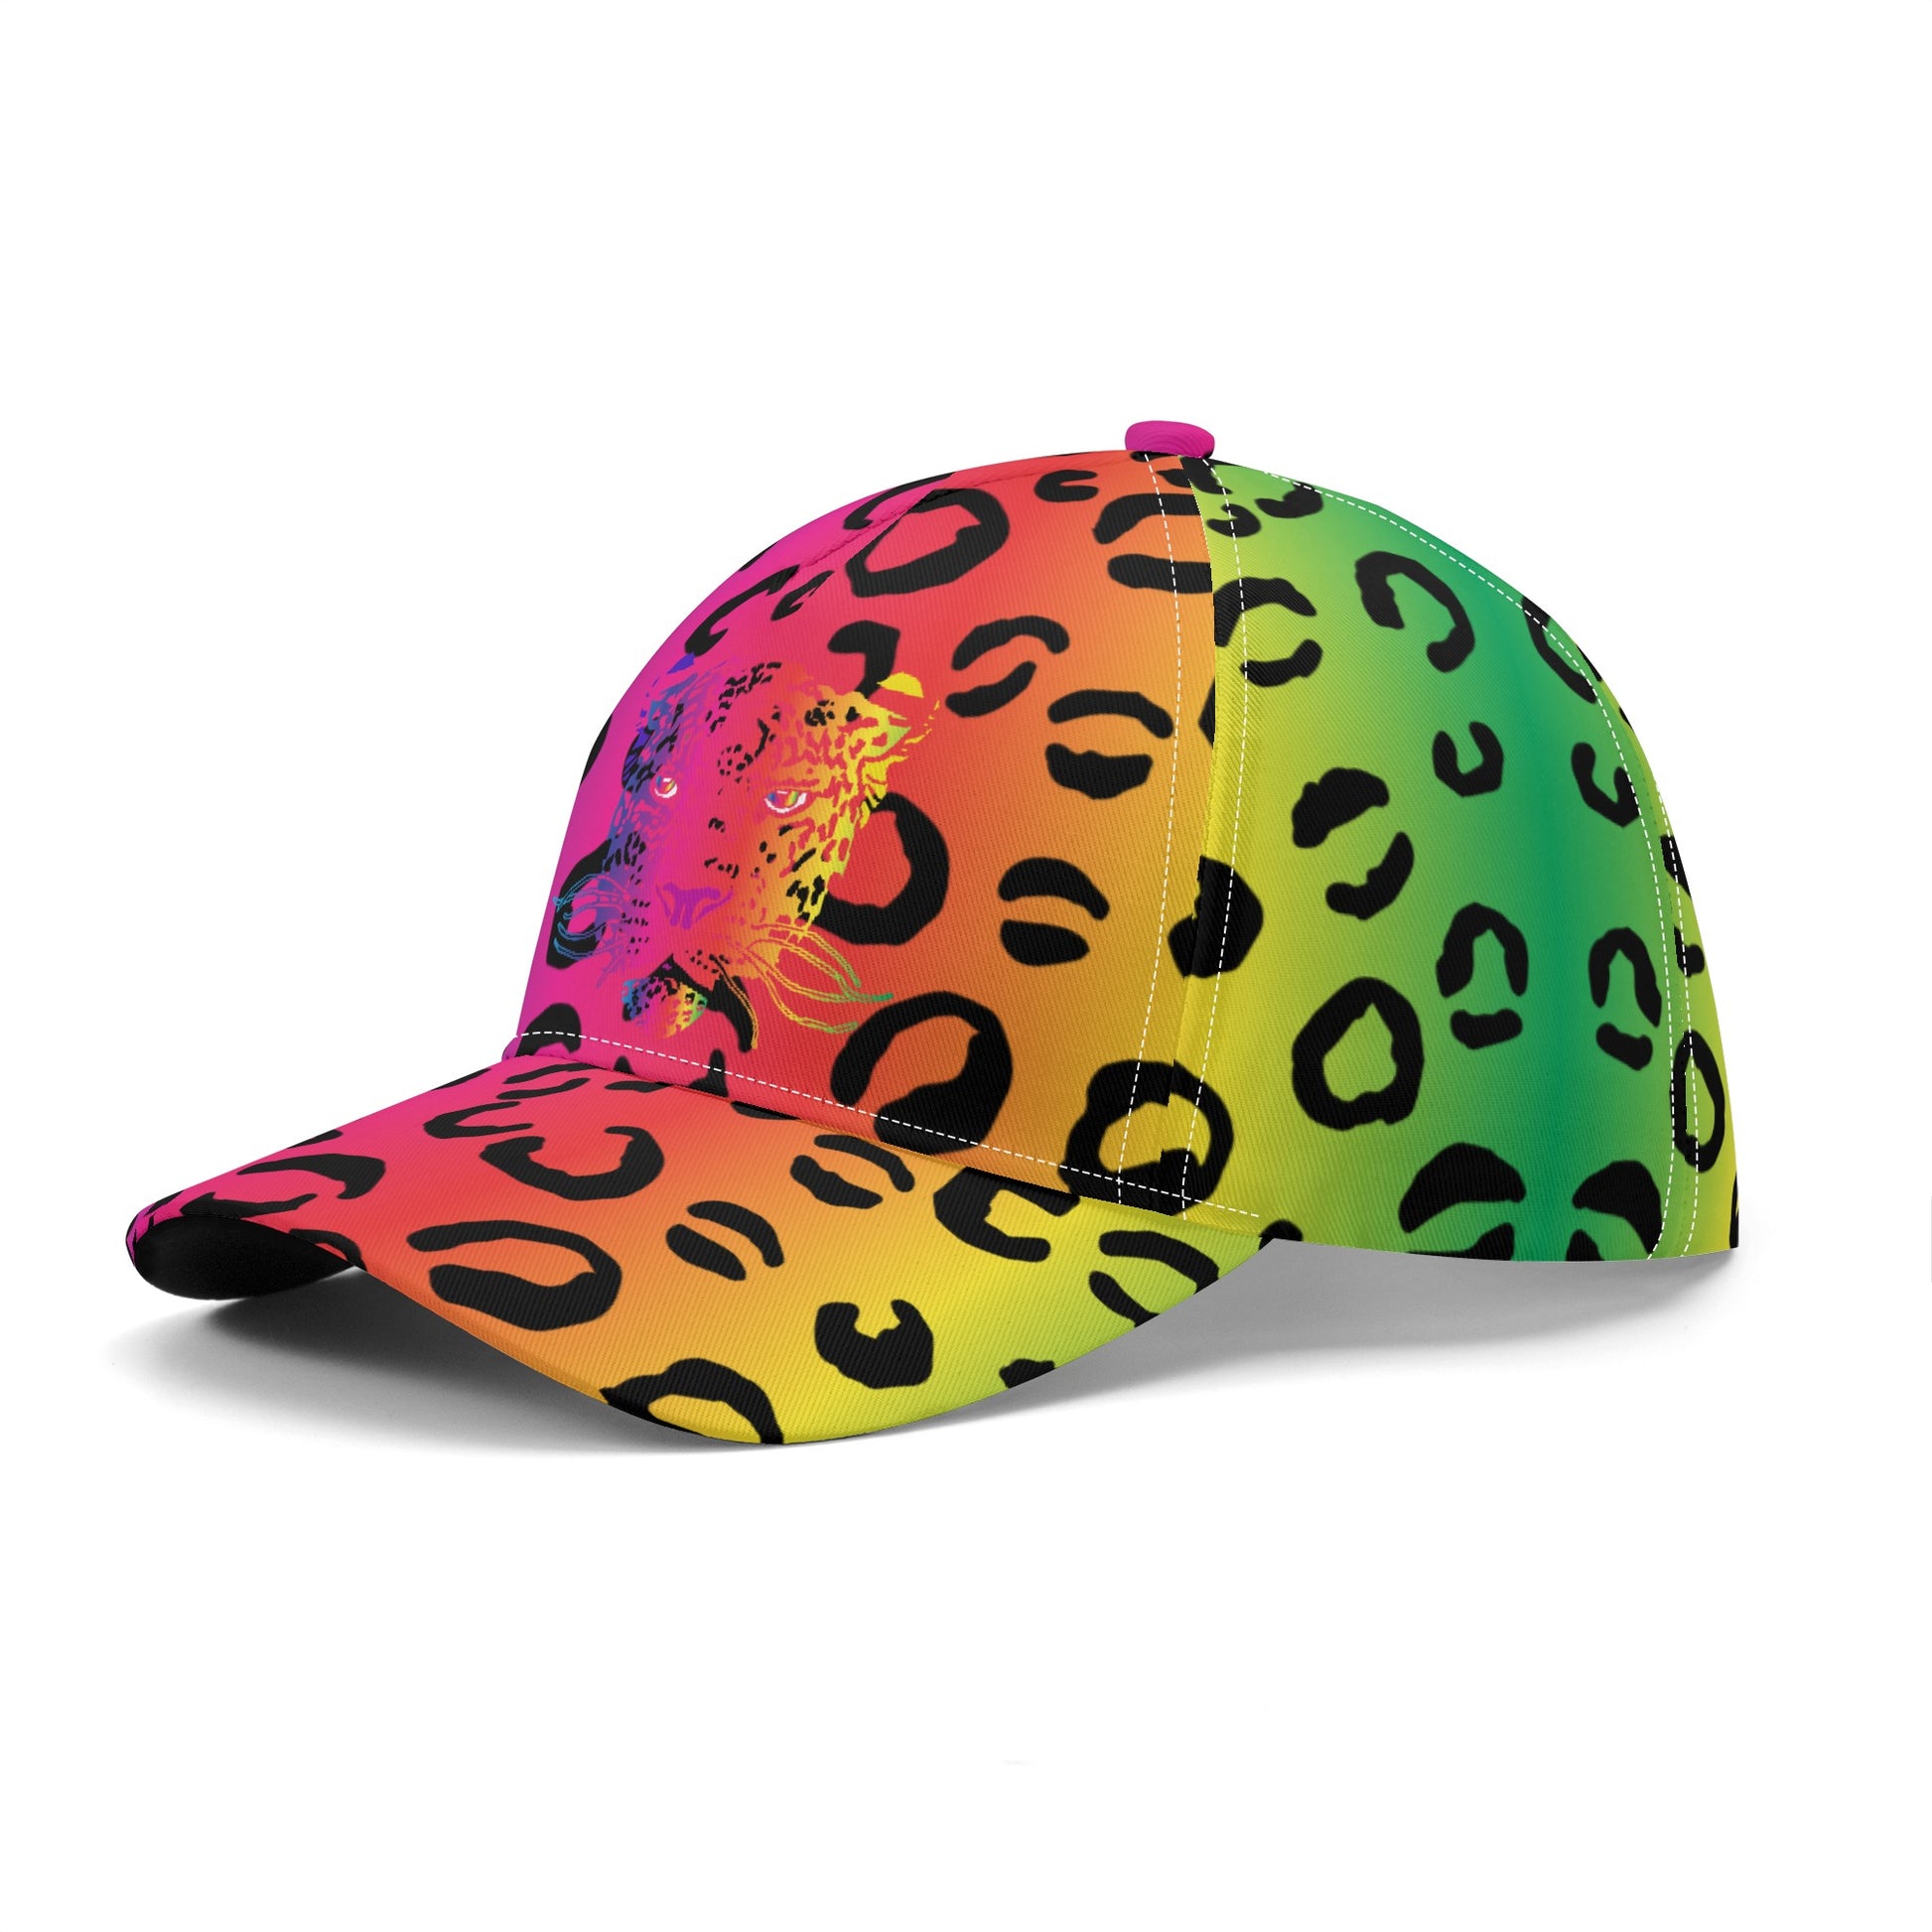 Rainbow Leopard Baseball Cap - HipHatter